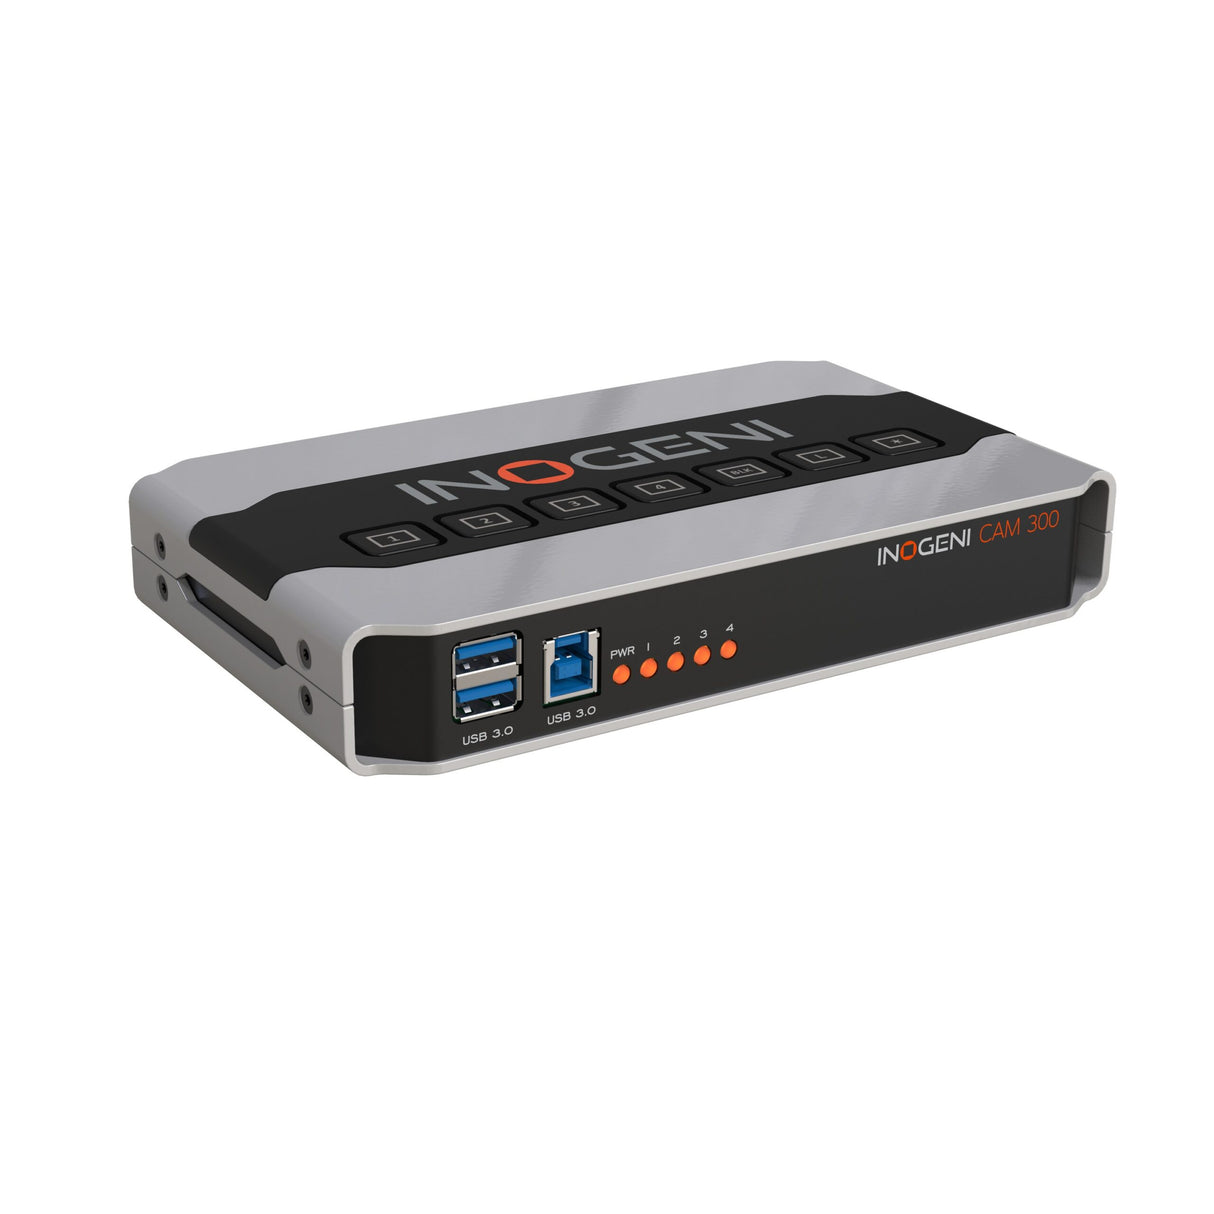 INOGENI CAM300 Switch 1 of 4 USB/HDMI Cameras to USB 3.0